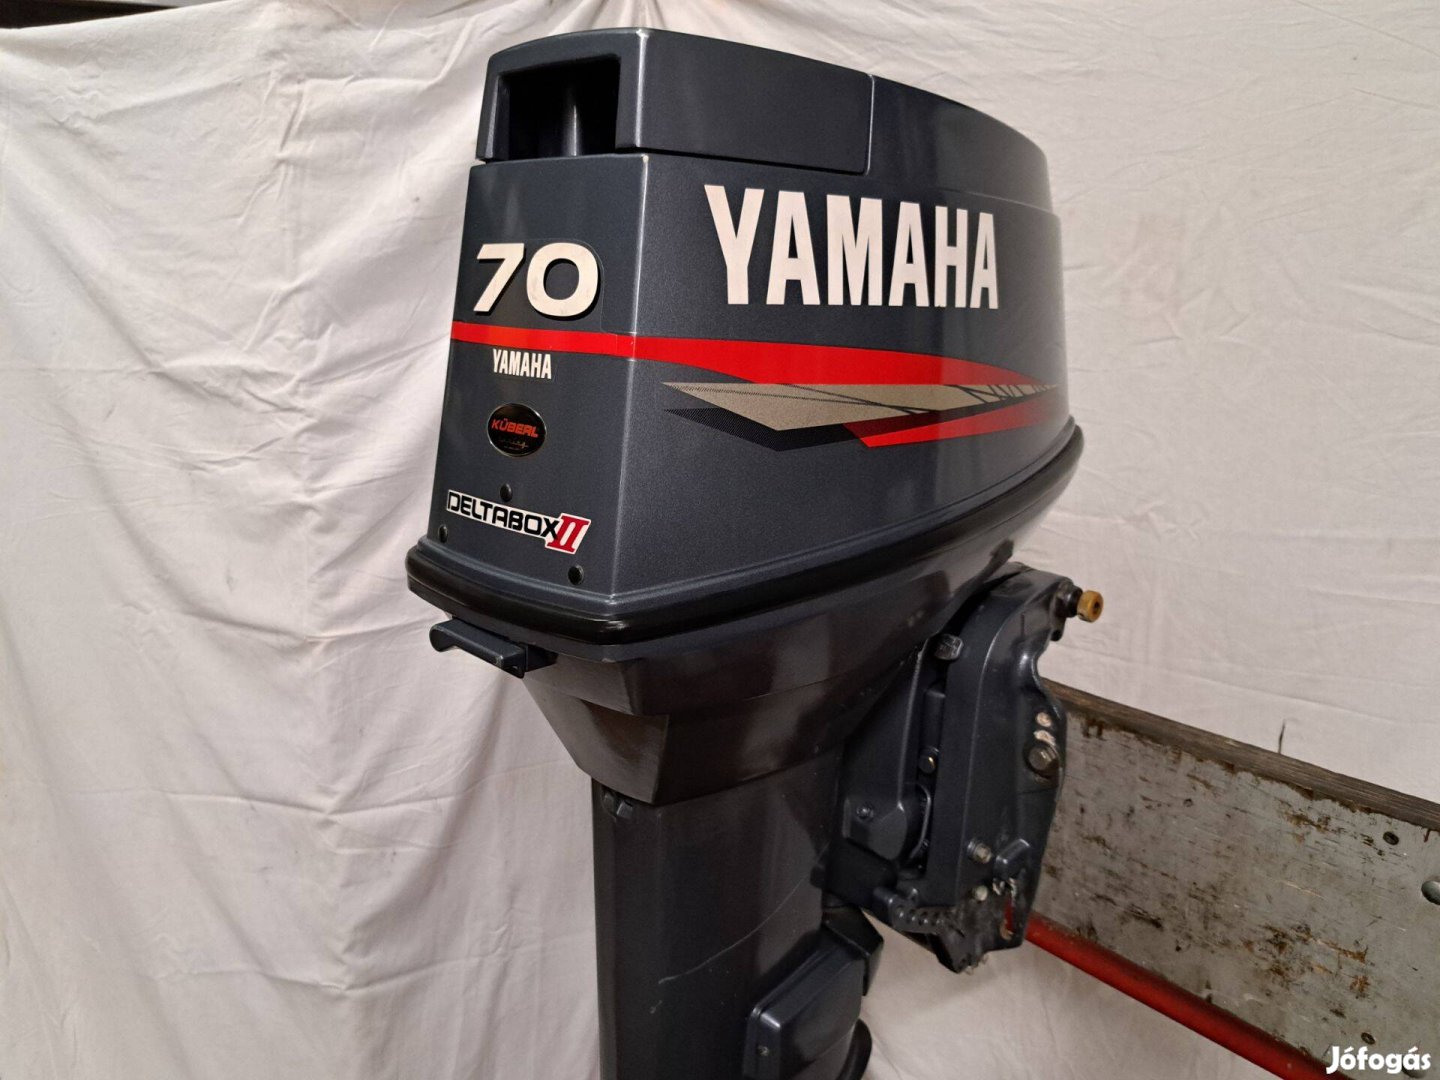 Yamaha 70 Le